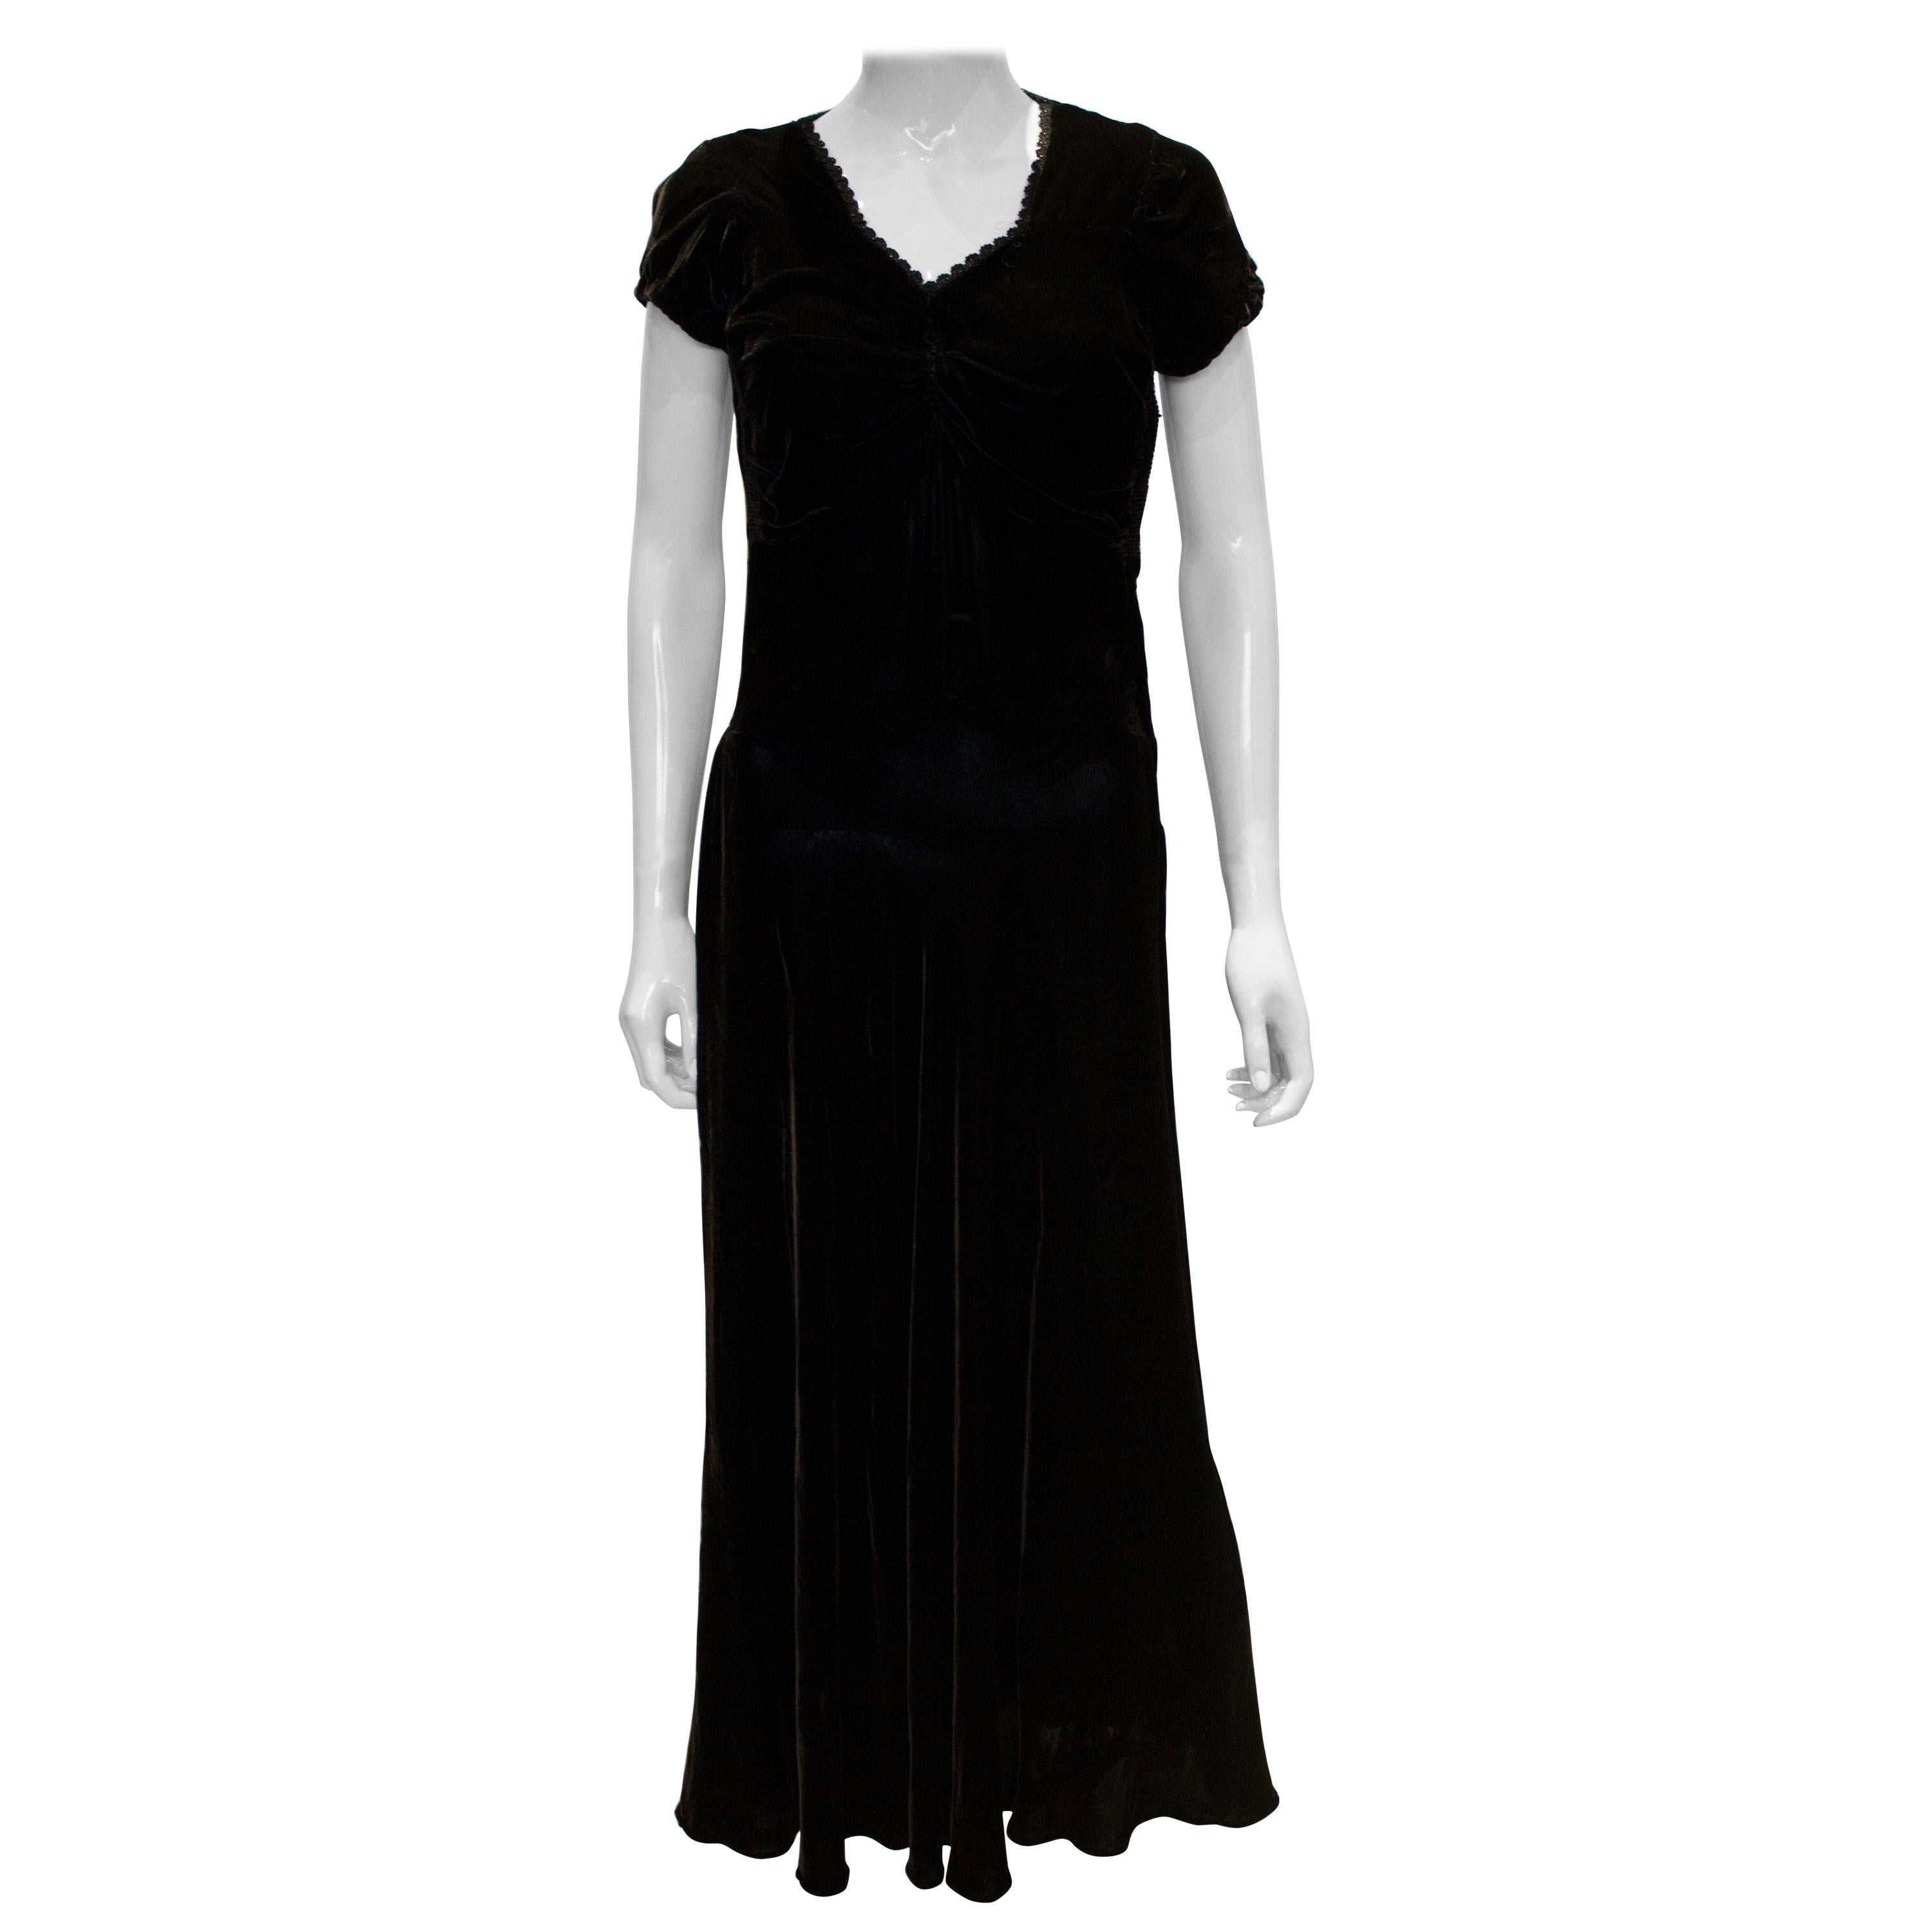 Vintage 1940s Black Velvet Dress For Sale